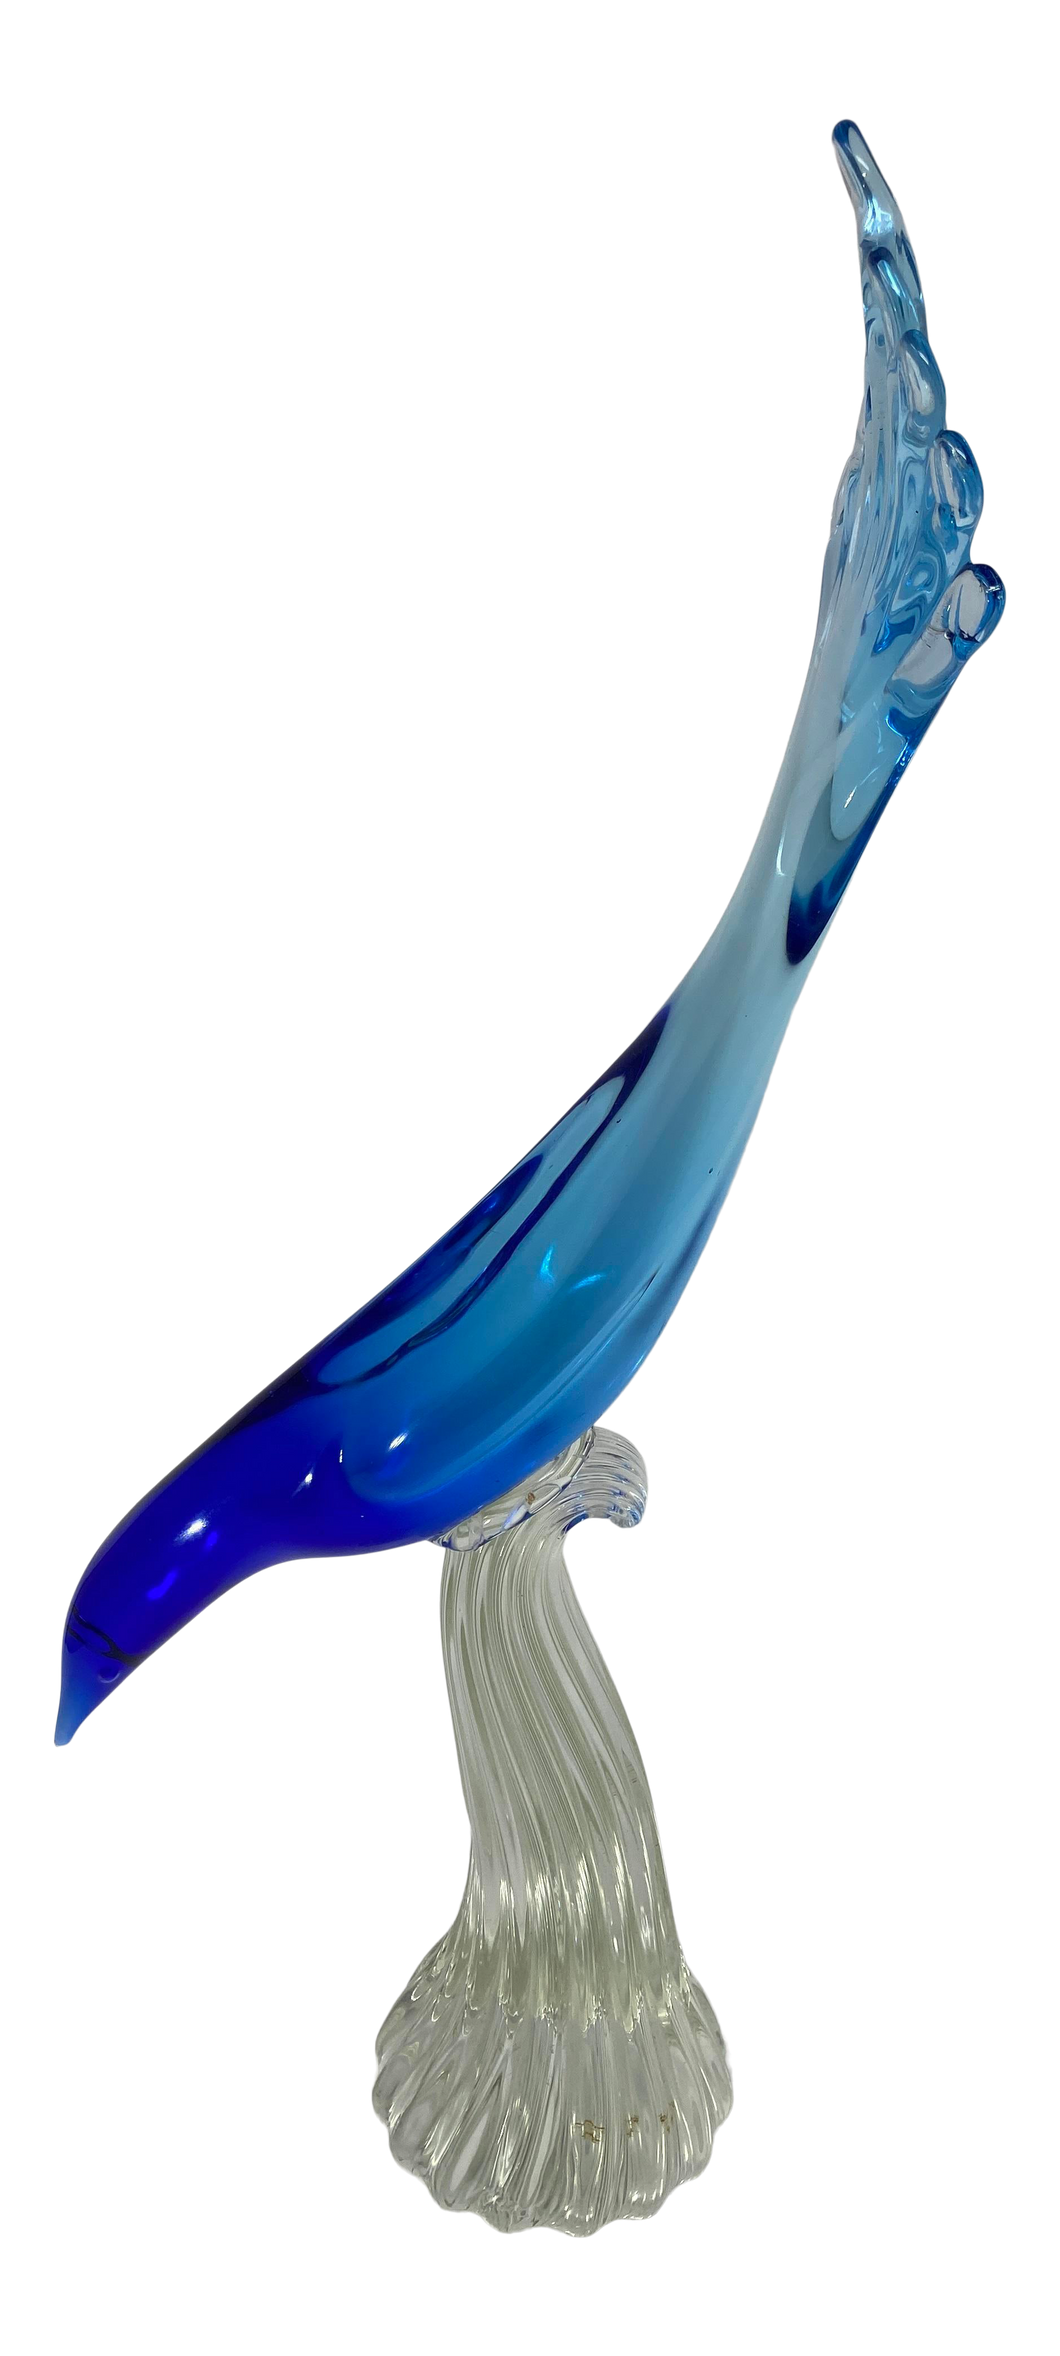 Vintage Murano Glass Bird